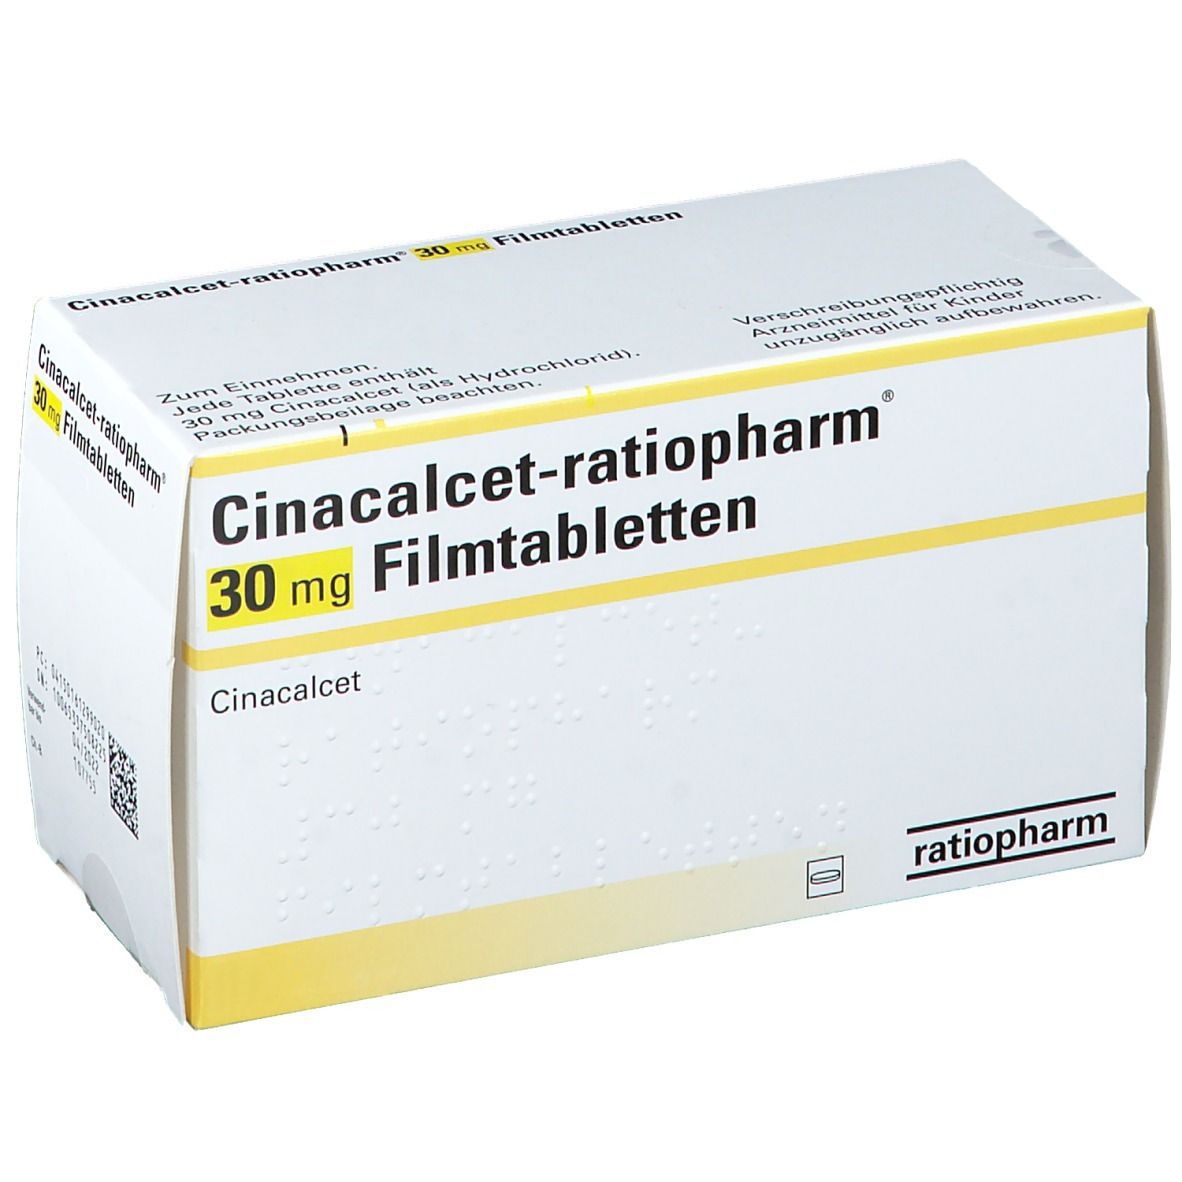 Cinacalcet-ratiopharm® 30 mg